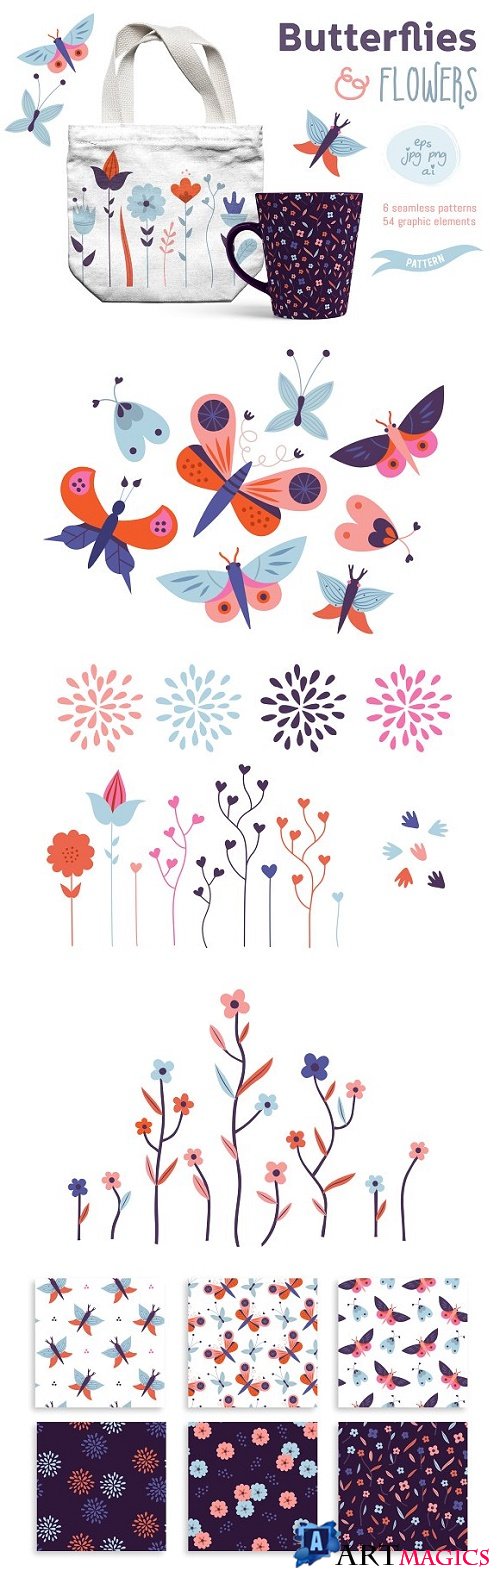 Butterflies and flowers vector set 2369667